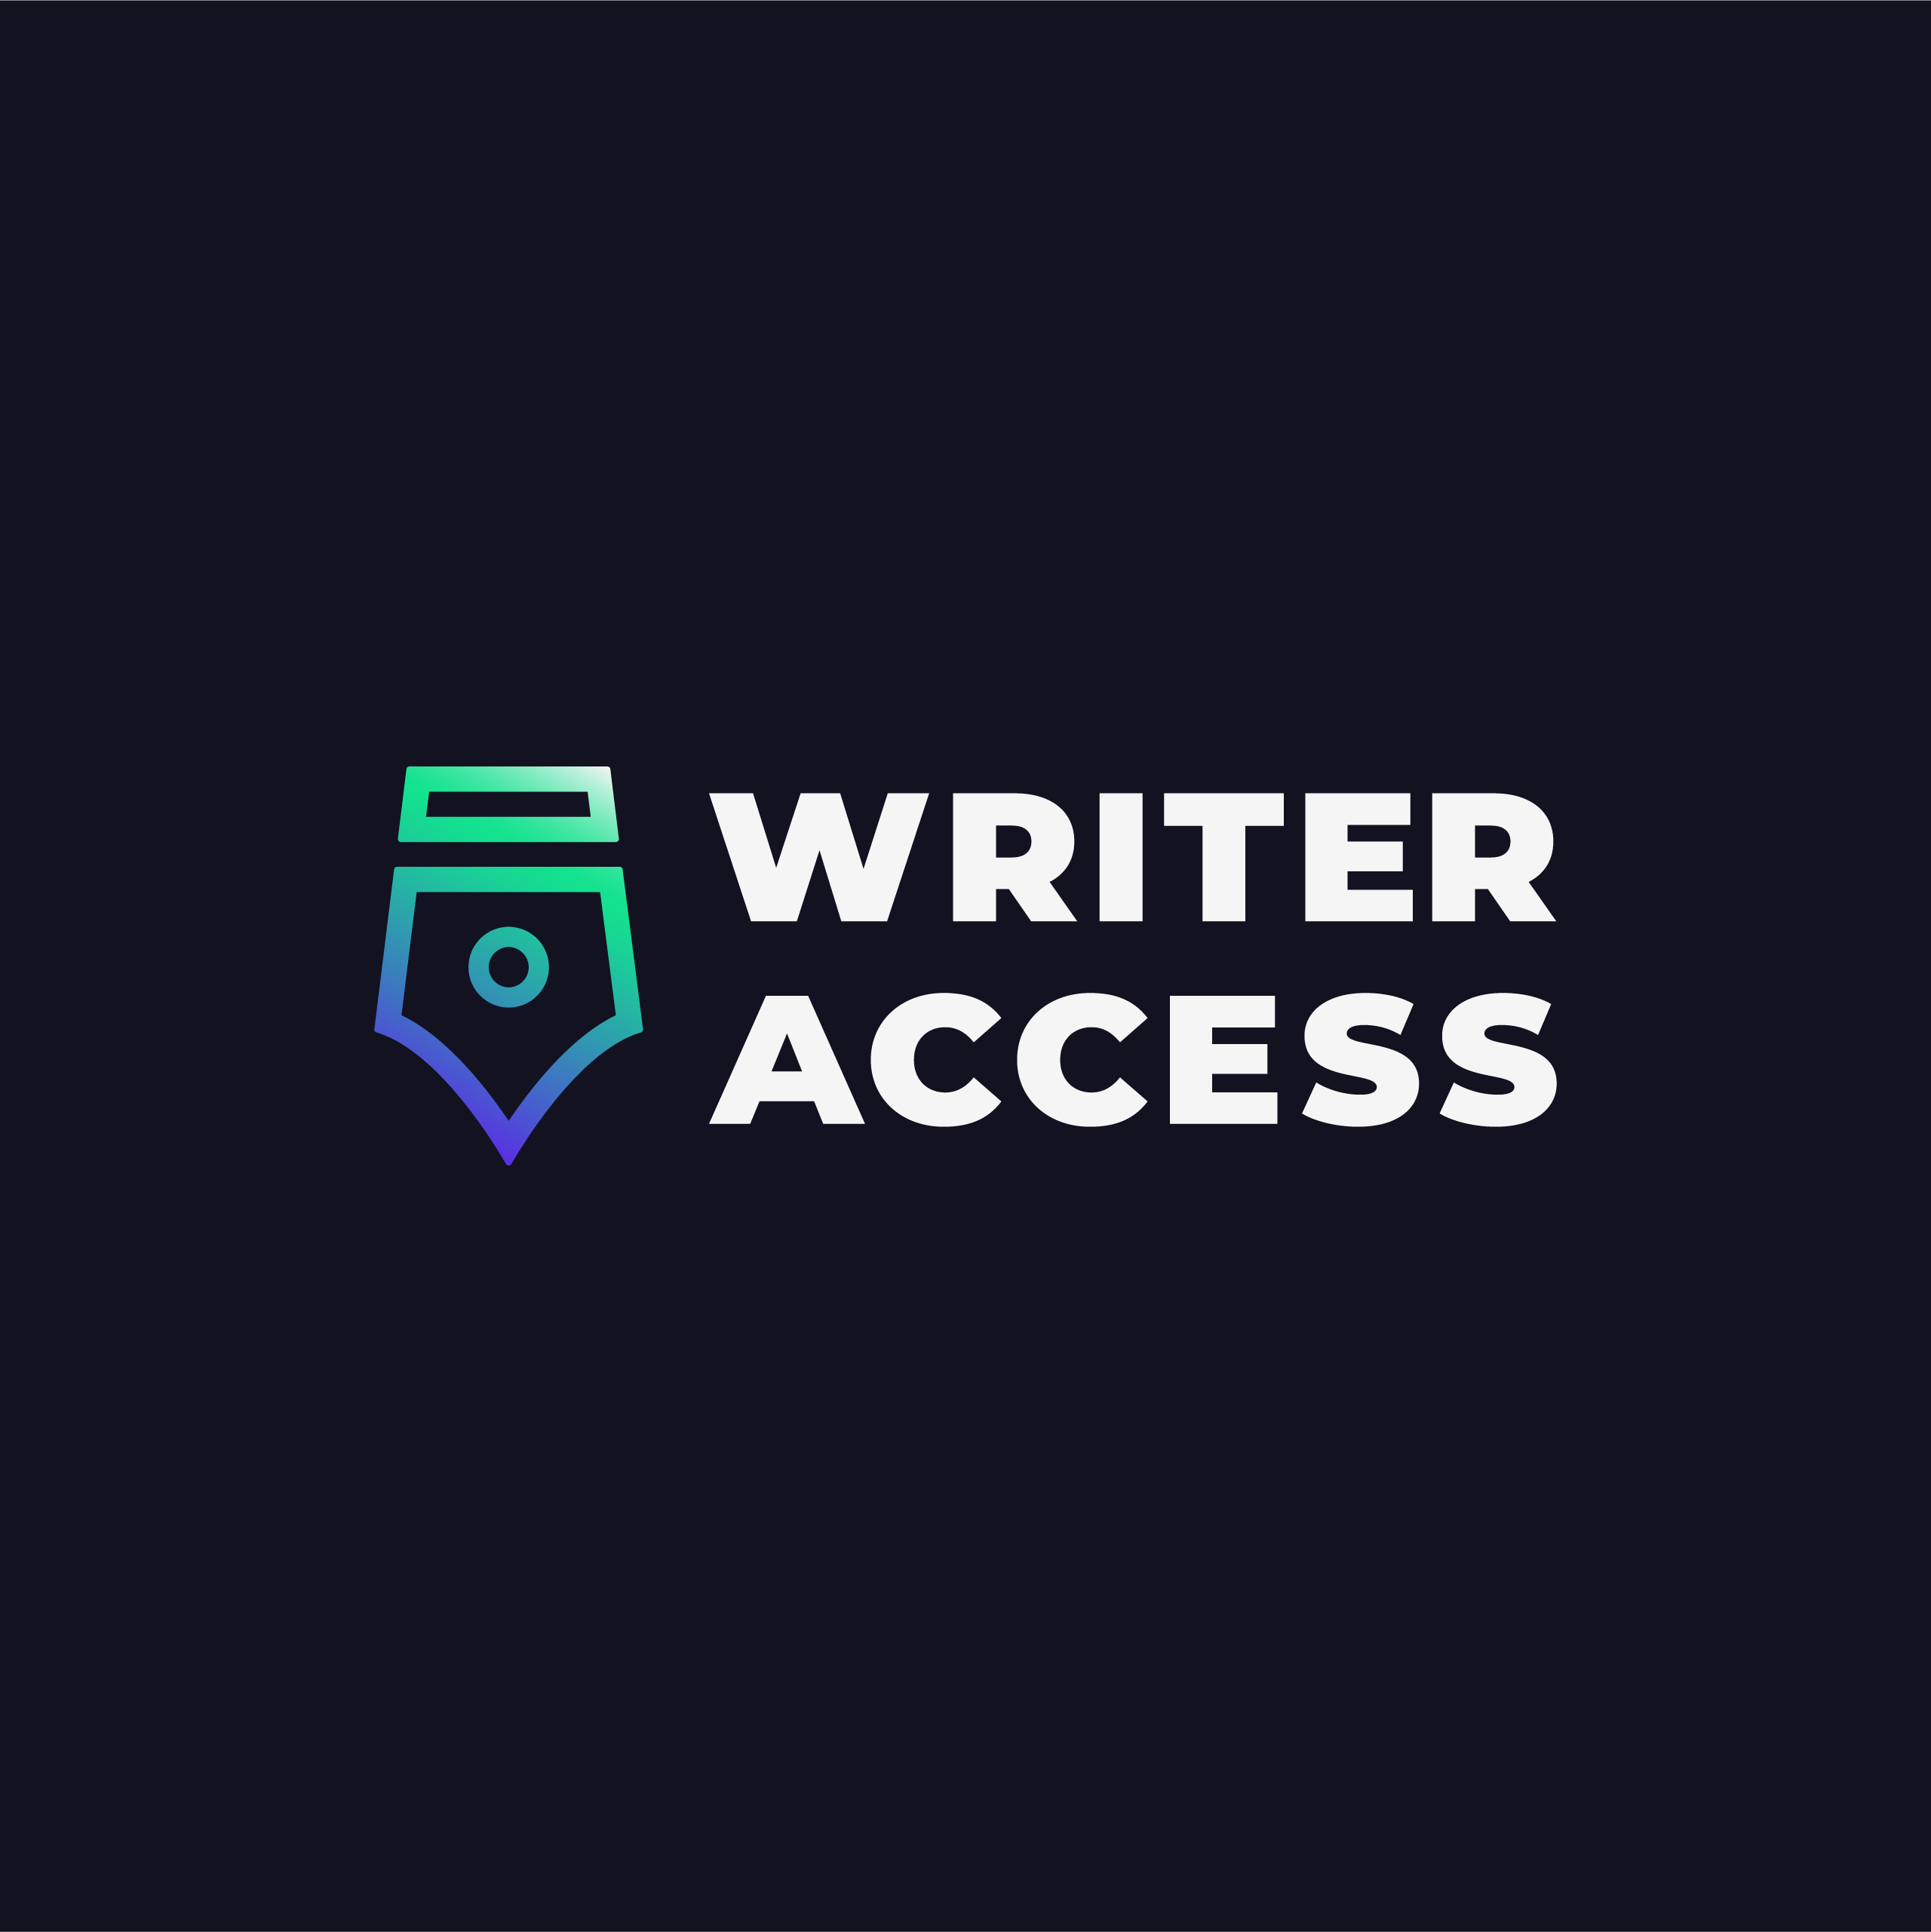 Writer Access logo